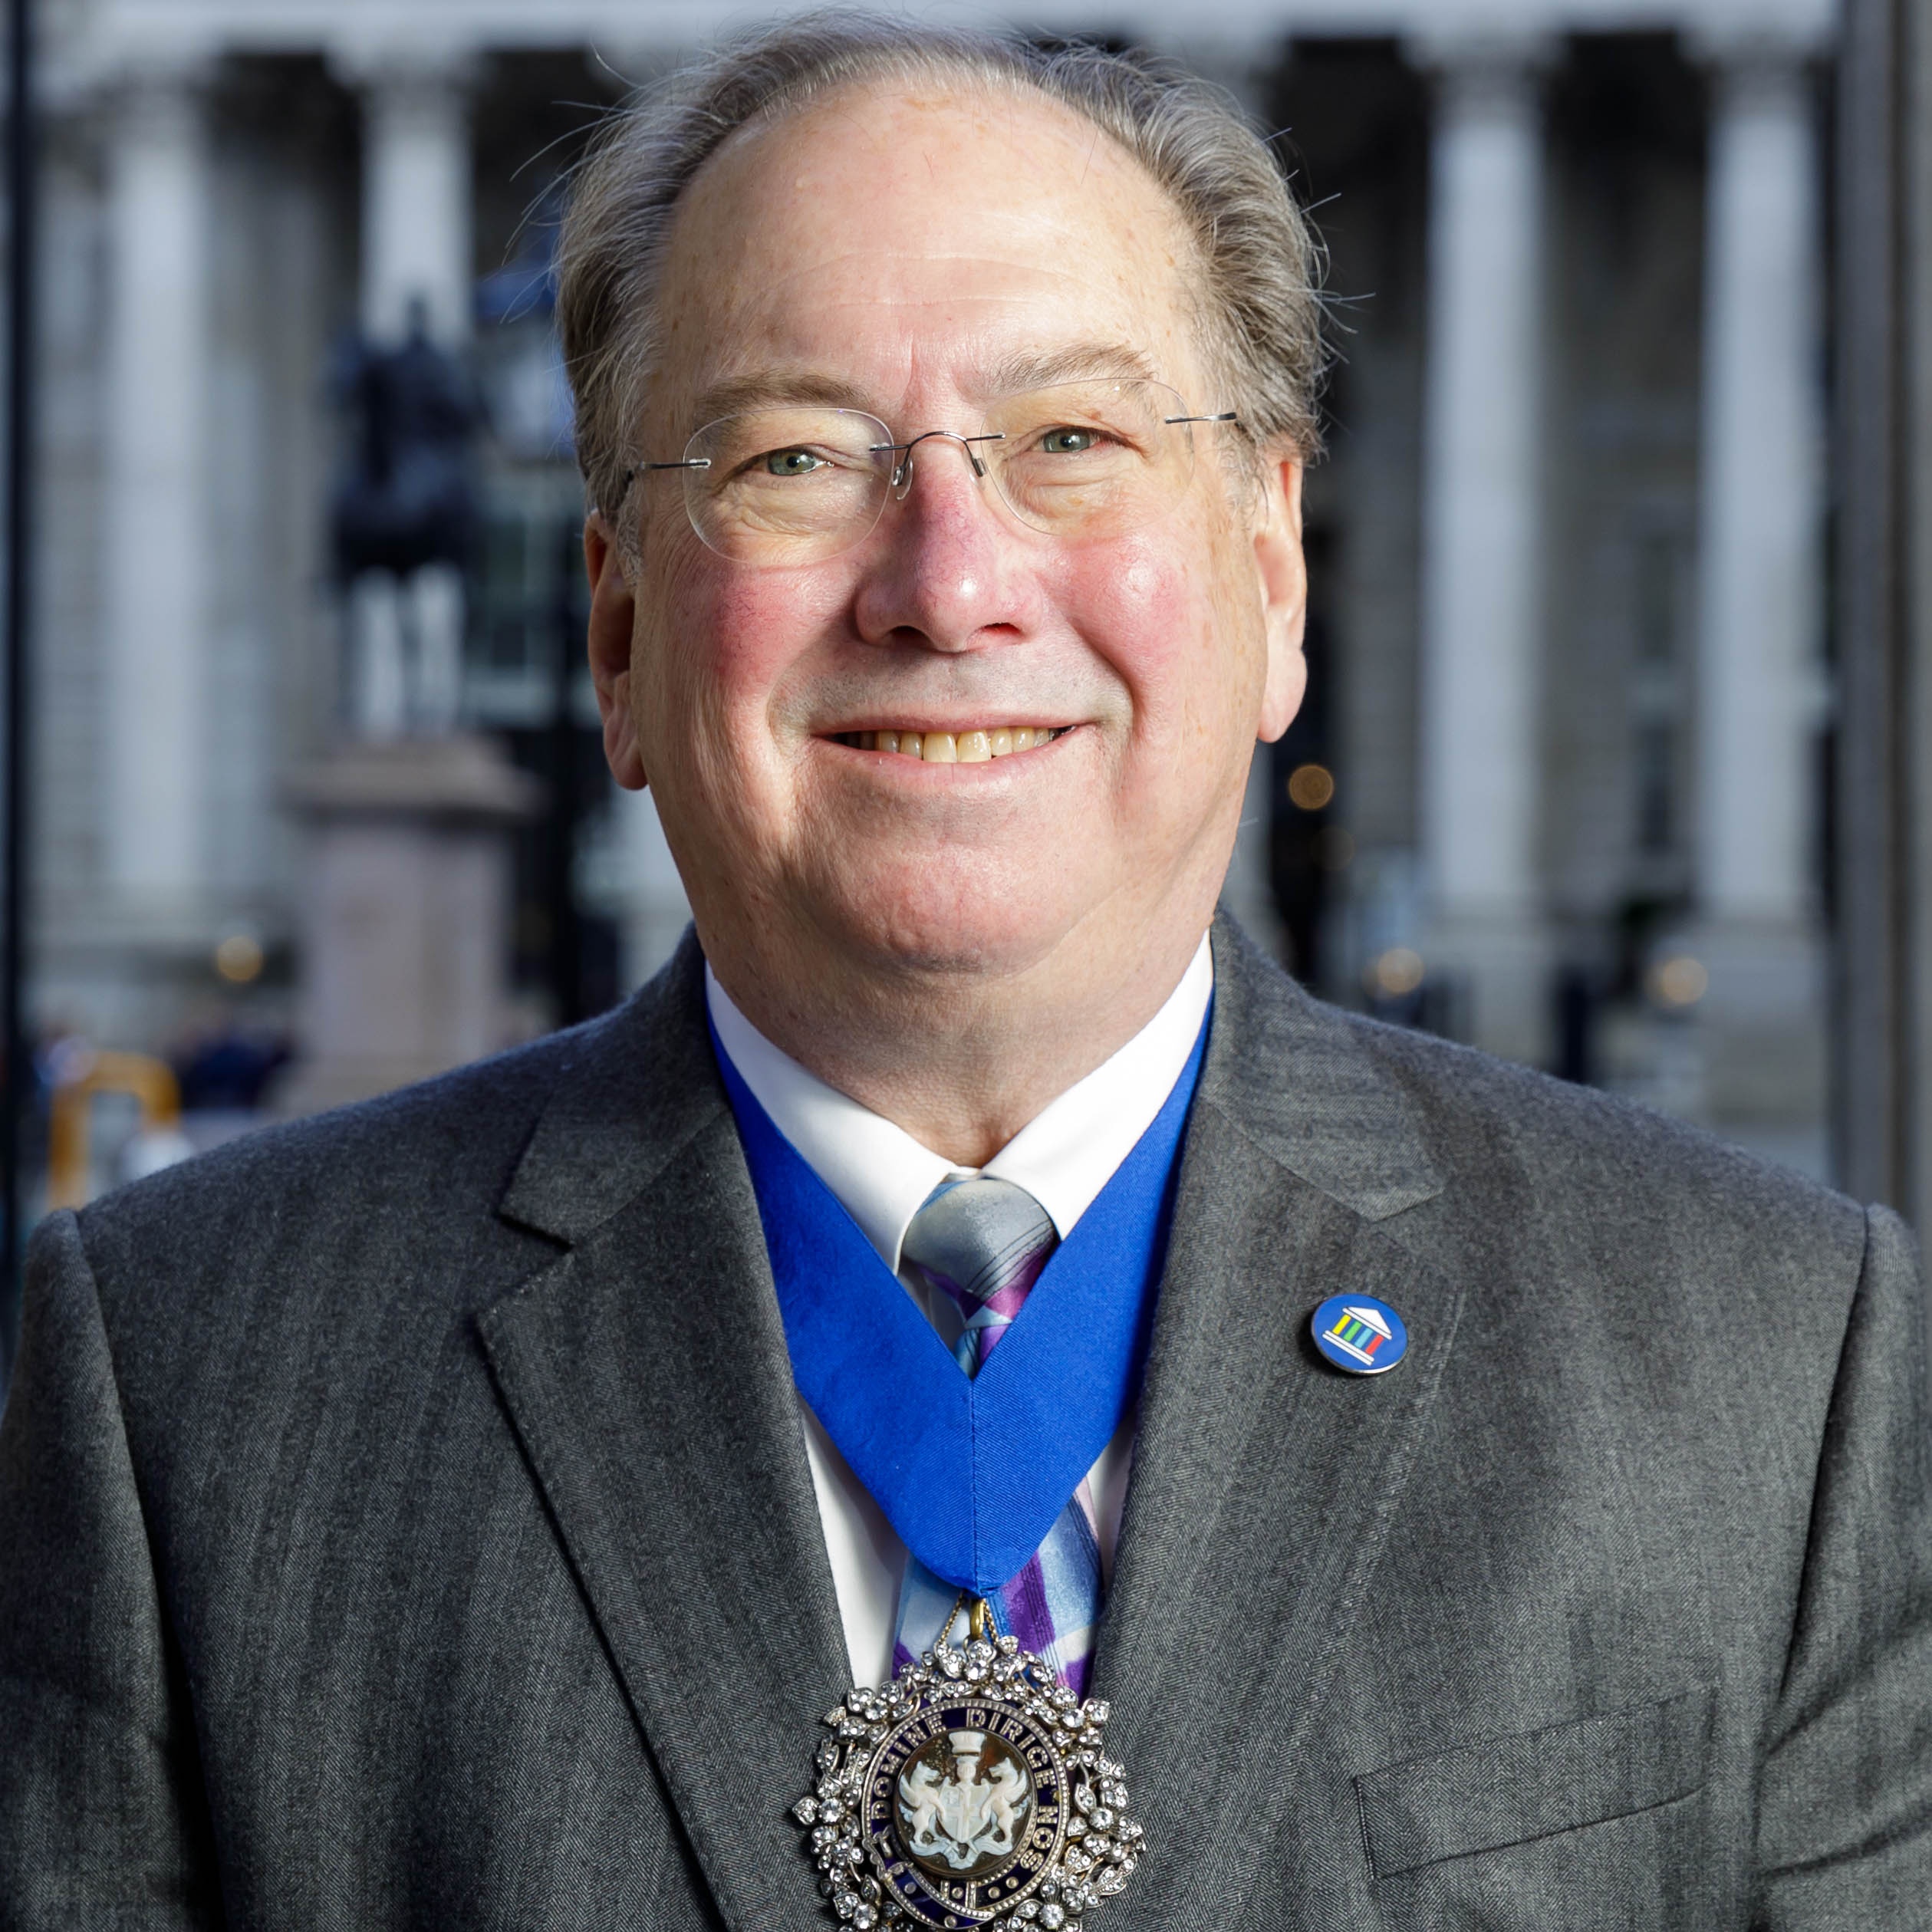 The Rt Hon The Lord Mayor of London, Alderman Professor Michael Mainelli